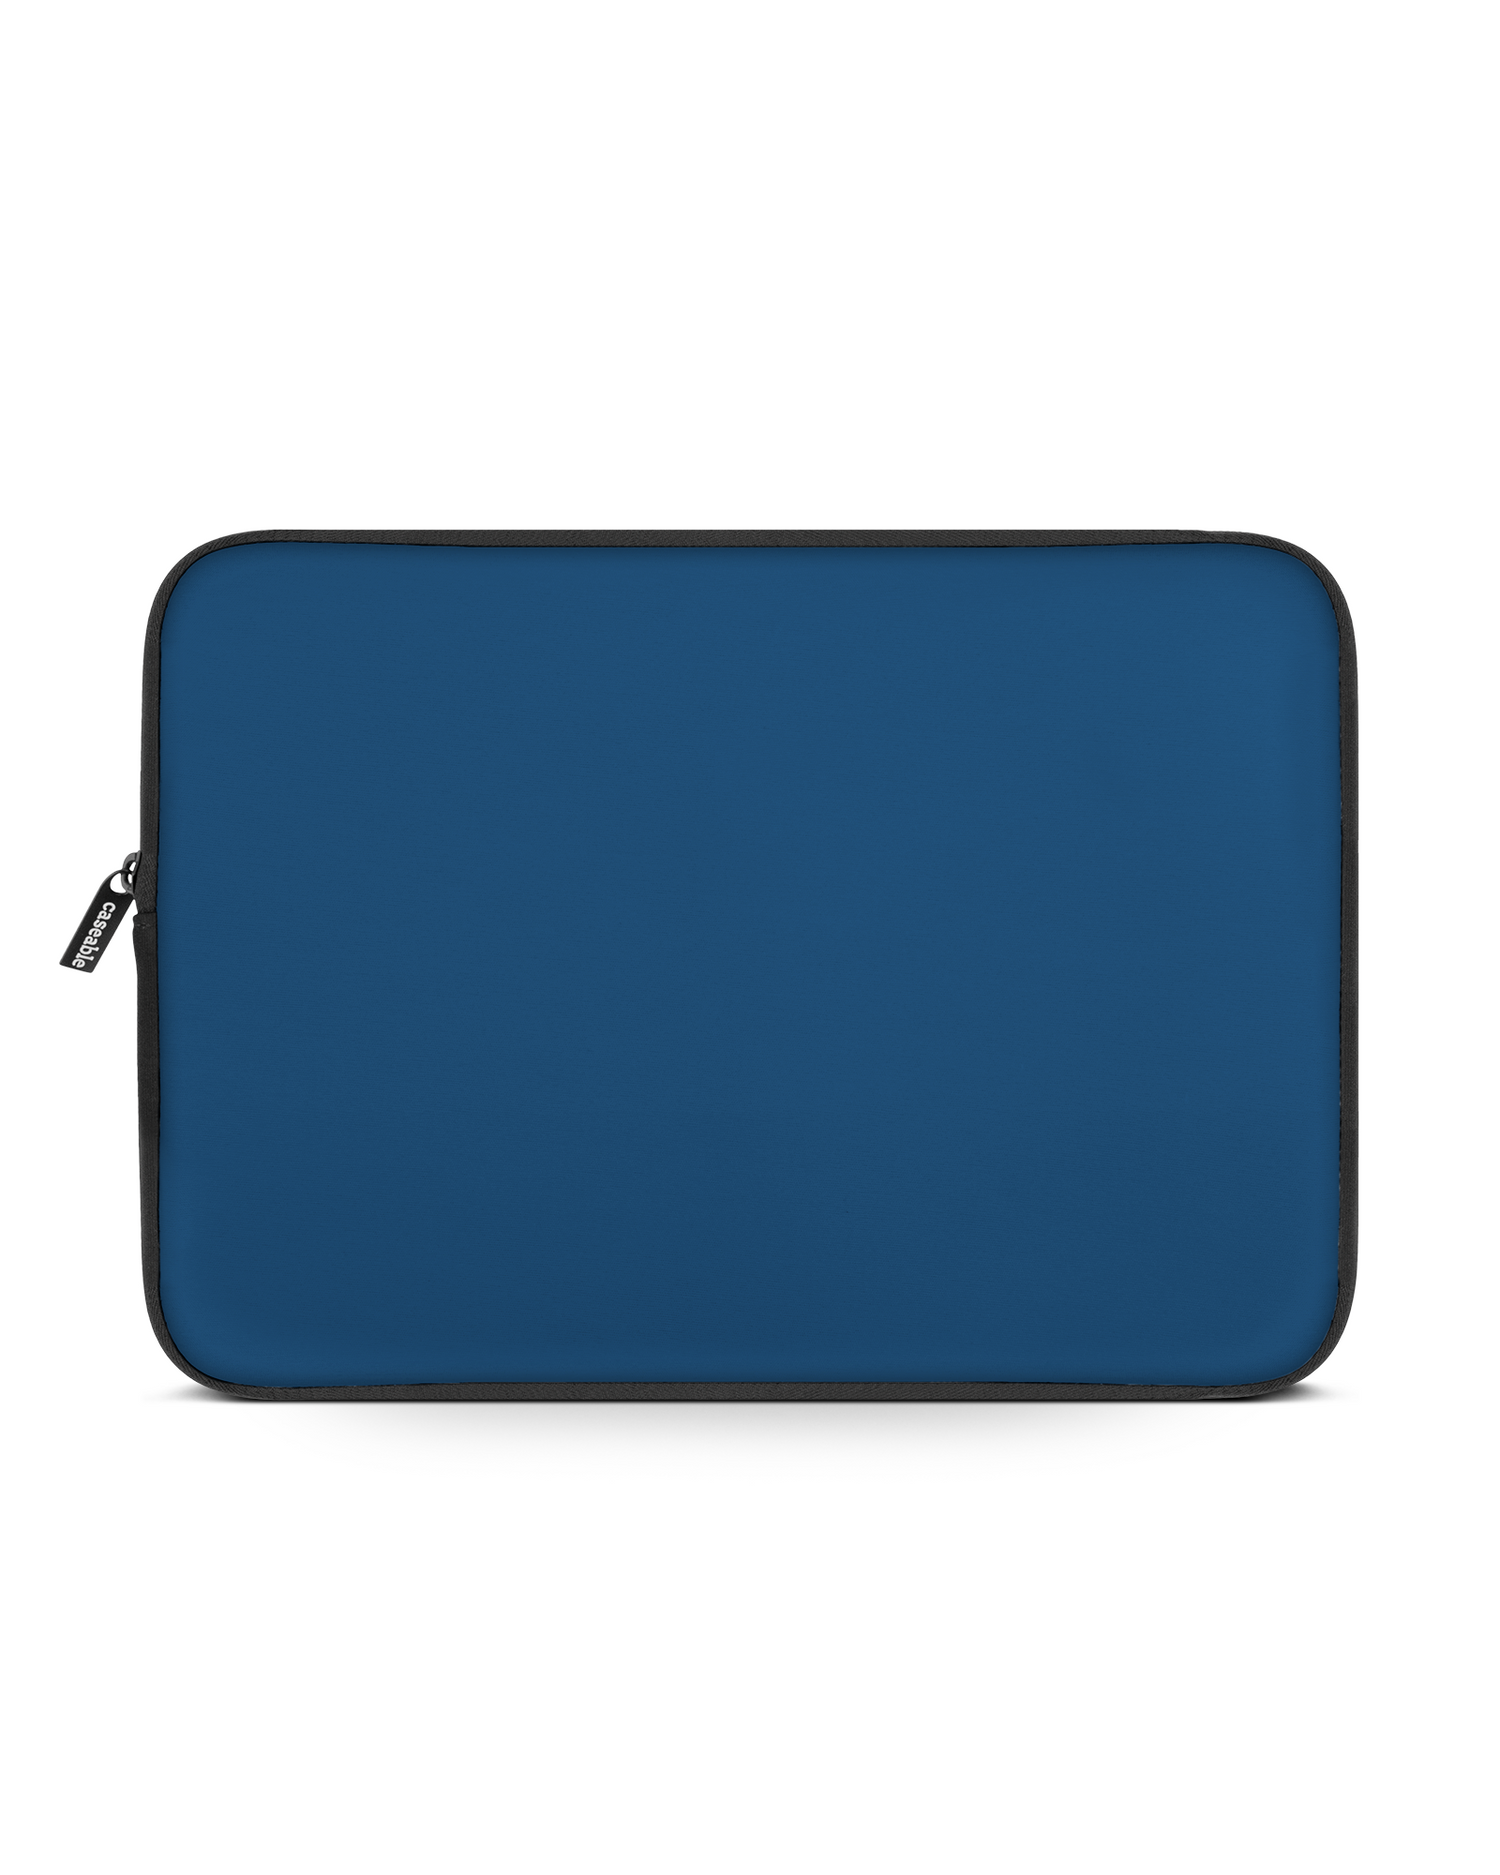 CLASSIC BLUE Laptophülle 16 Zoll: Vorderansicht